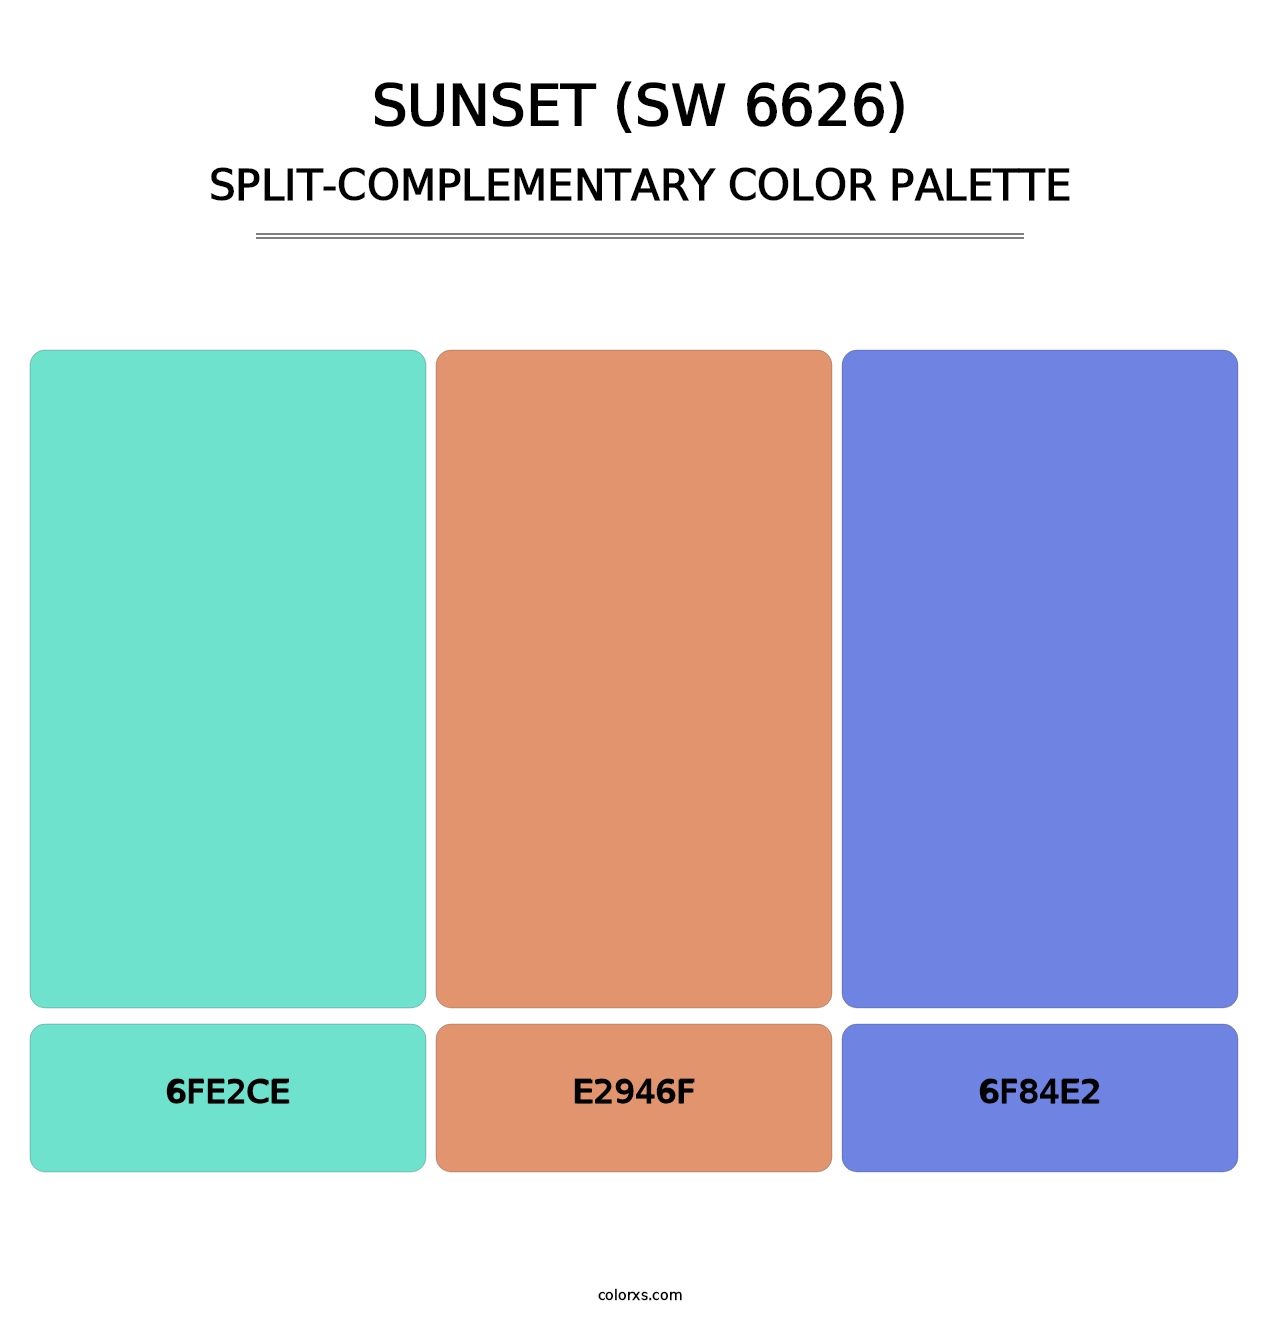 Sunset (SW 6626) - Split-Complementary Color Palette